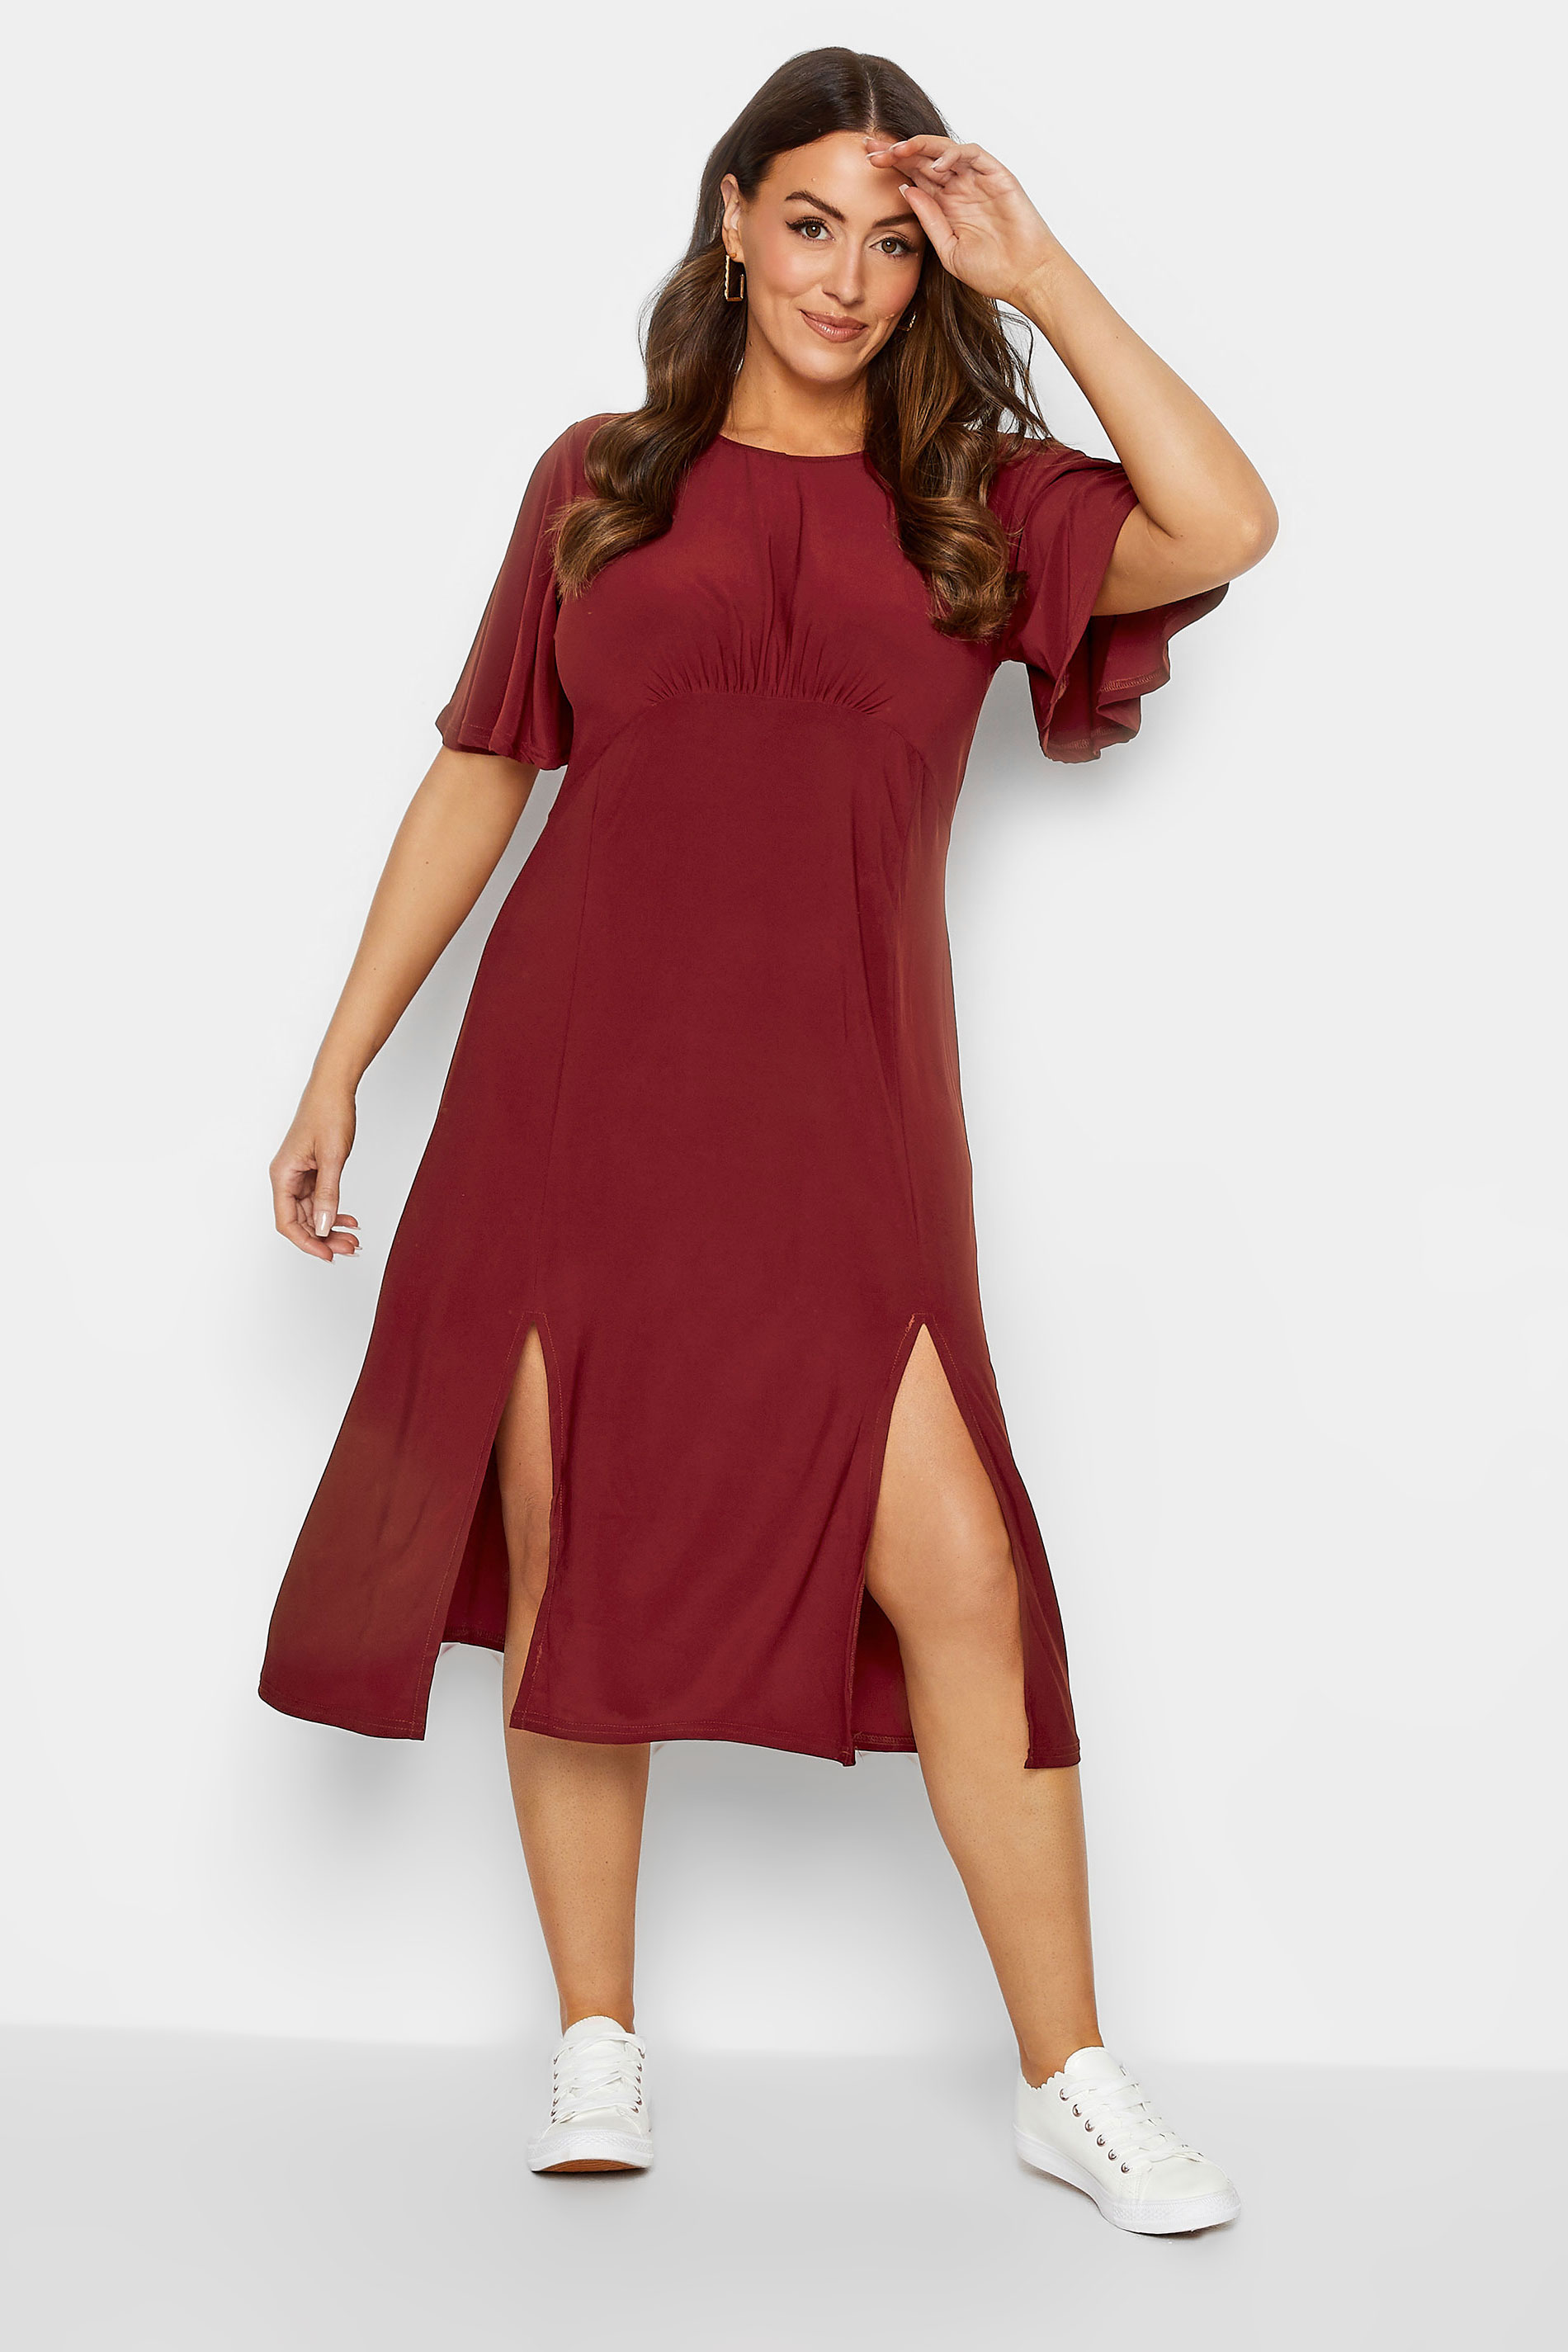 M&Co Burgundy Red Angel Sleeve Split Hem Midi Dress | M&Co 1